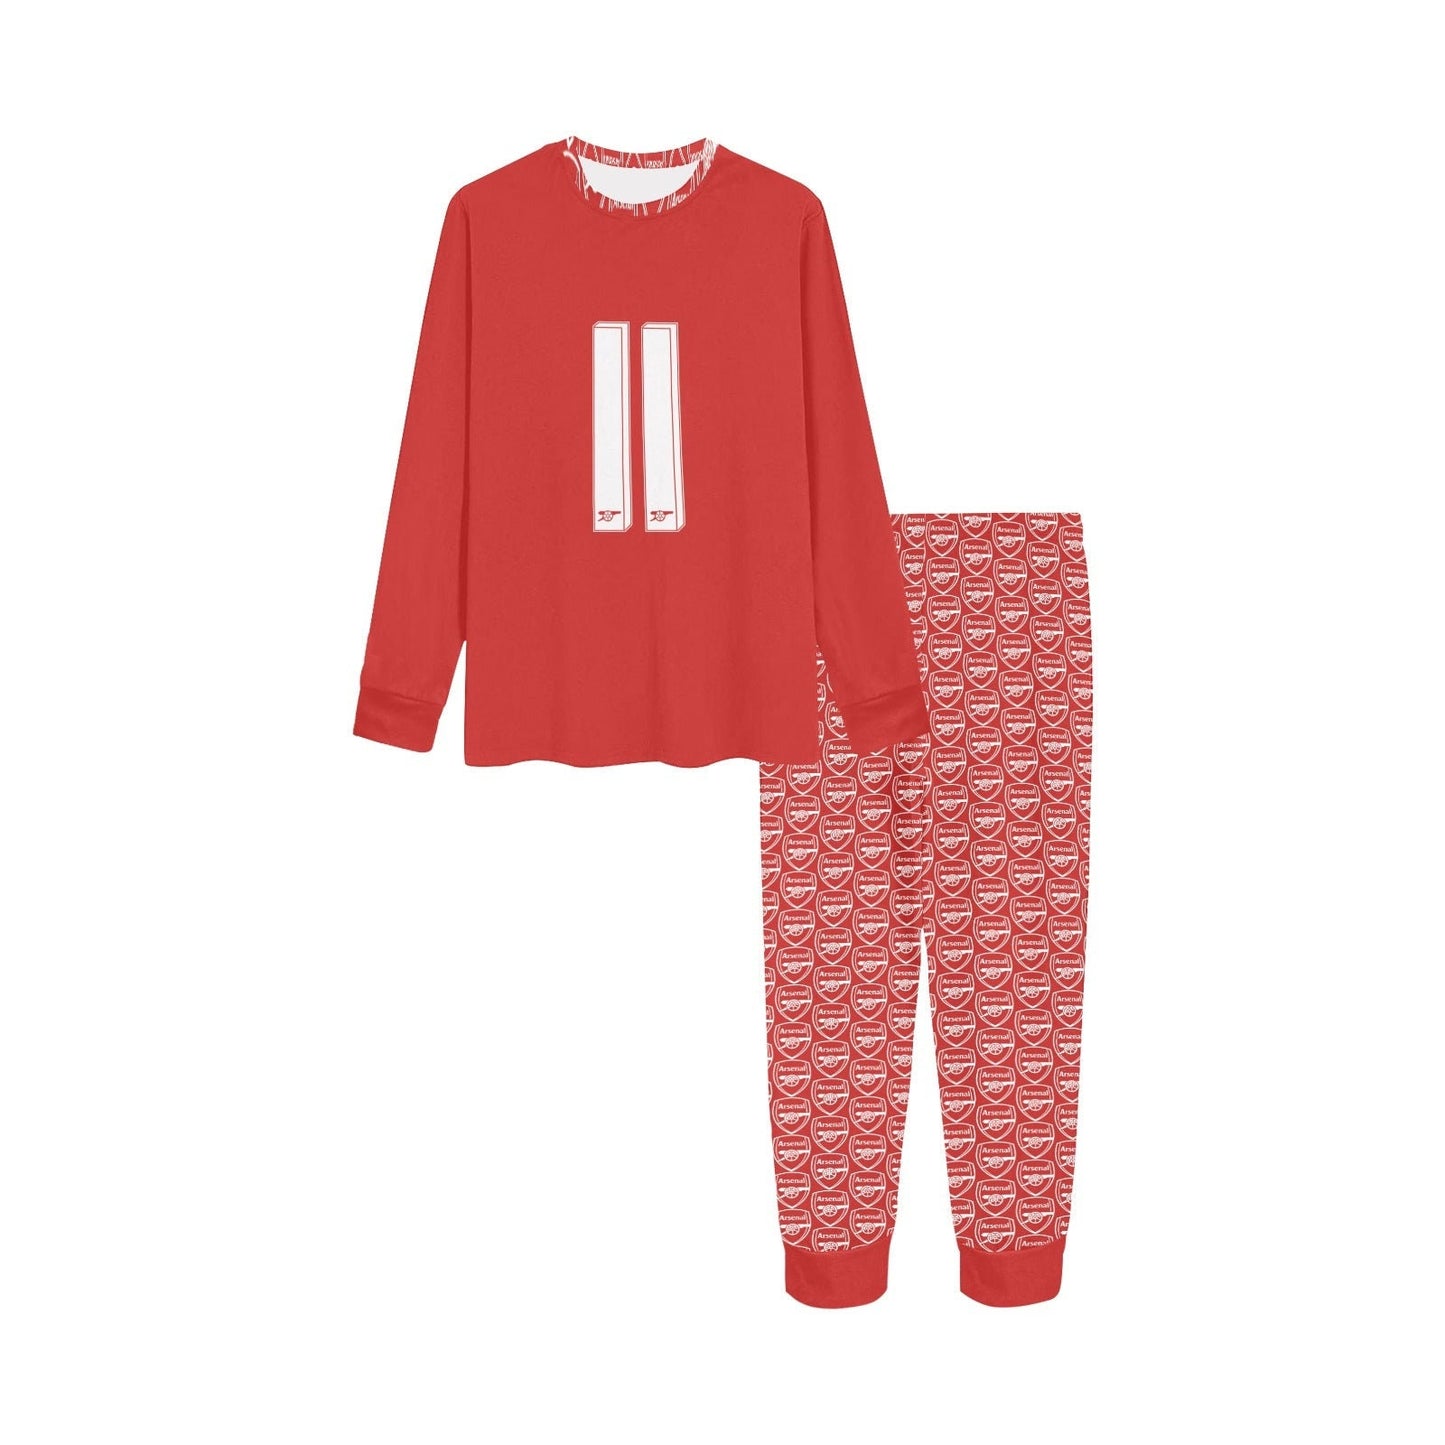 Arsenal • Gabriel Martinelli #11 • Kids Soccer Pajamas • Premier League Soccer • Custom Arsenal Pajamas